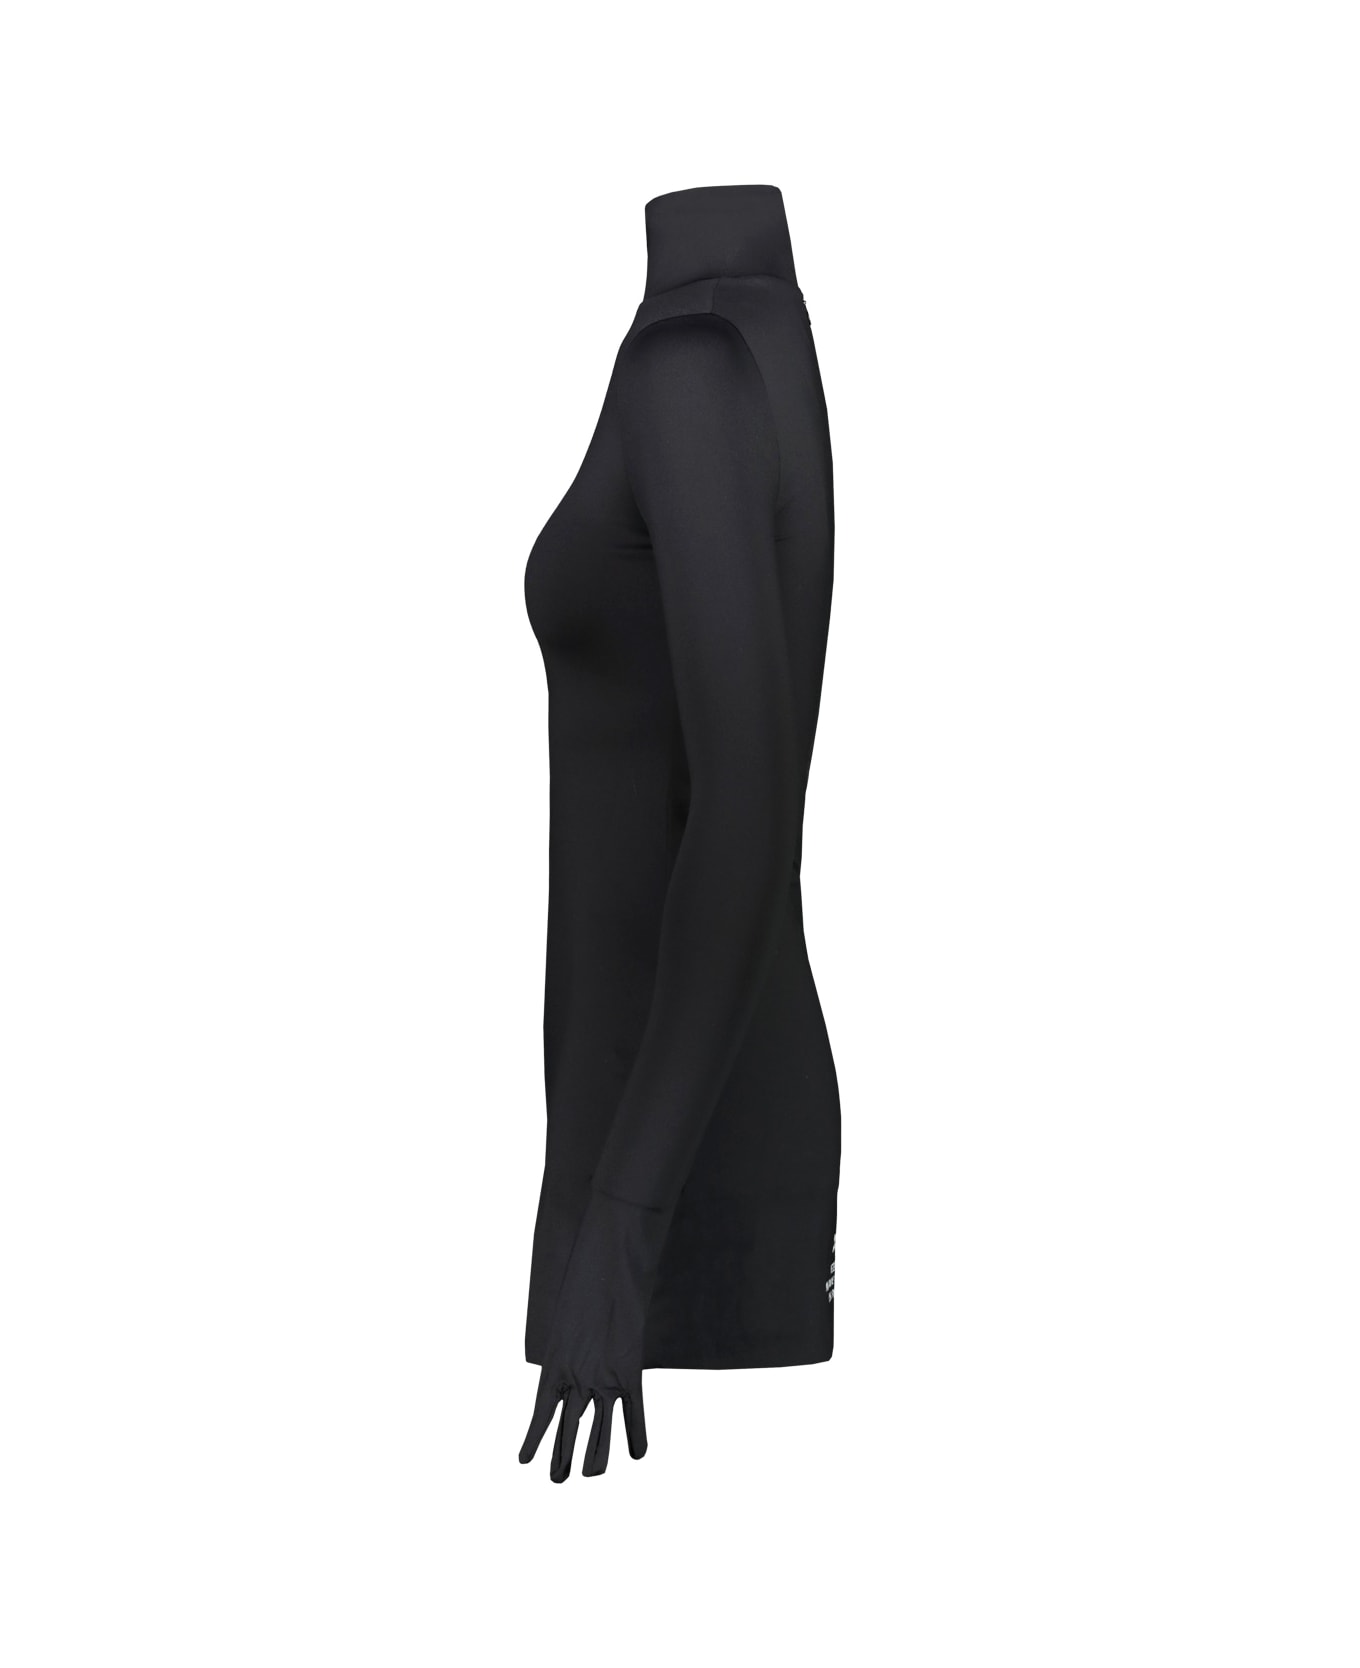 VETEMENTS Maison De Couture Styling Dress With Gloves - Black